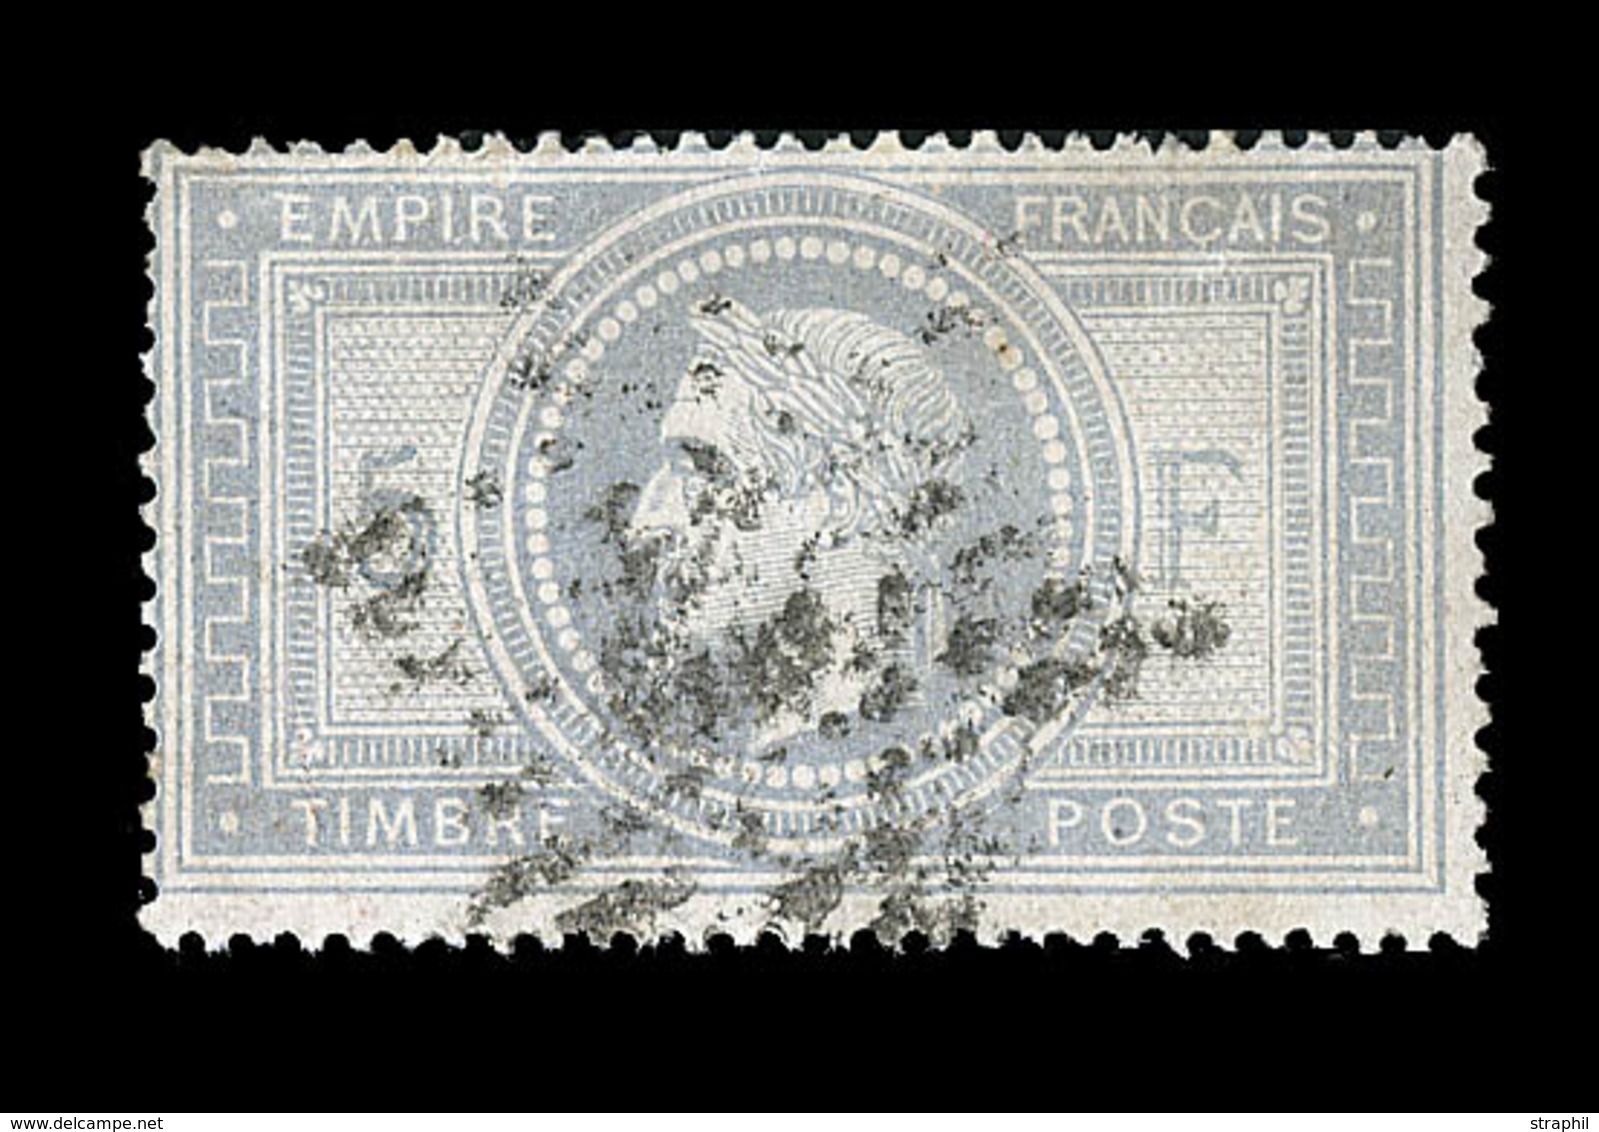 O NAPOLEON LAURE - O - N°33 - Signé Brun - Assez Bon Centrage - TB - 1863-1870 Napoleon III With Laurels